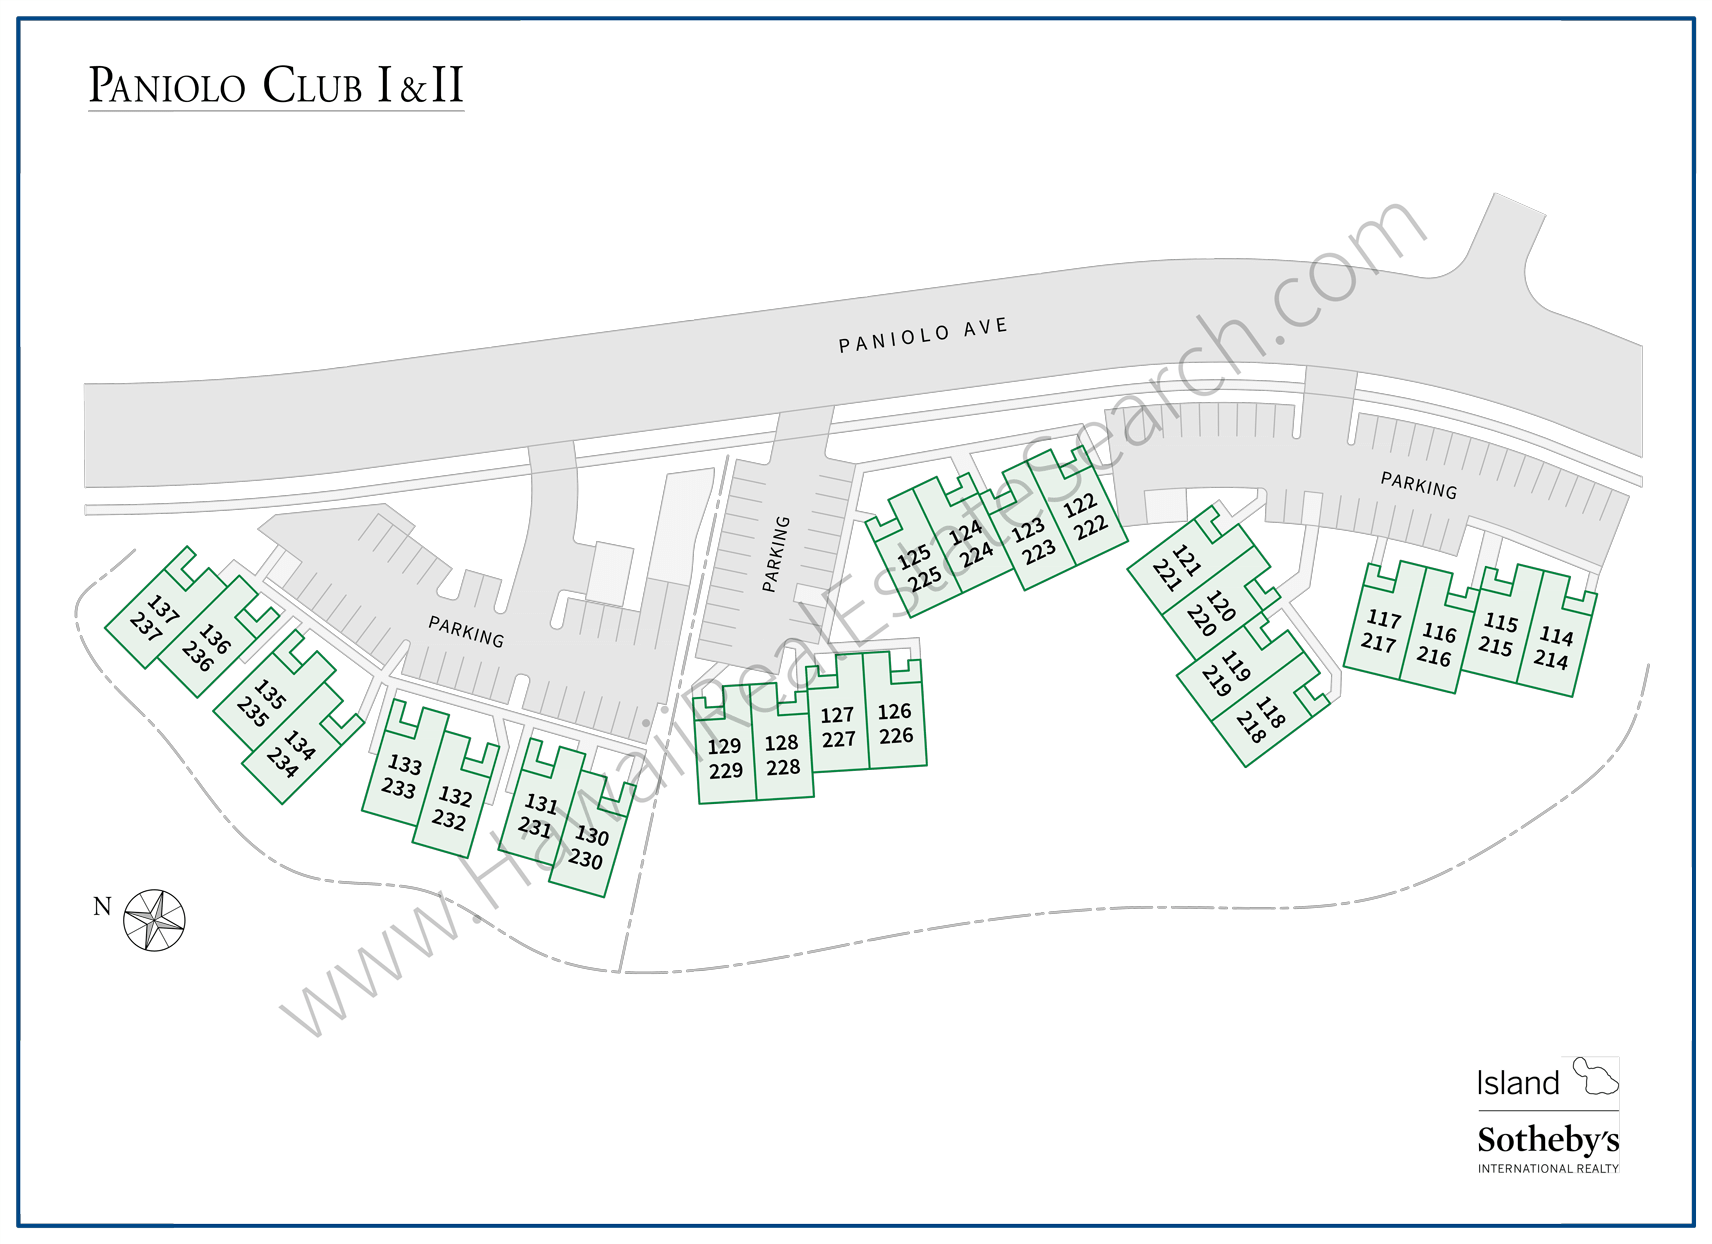 Paniolo Club Map